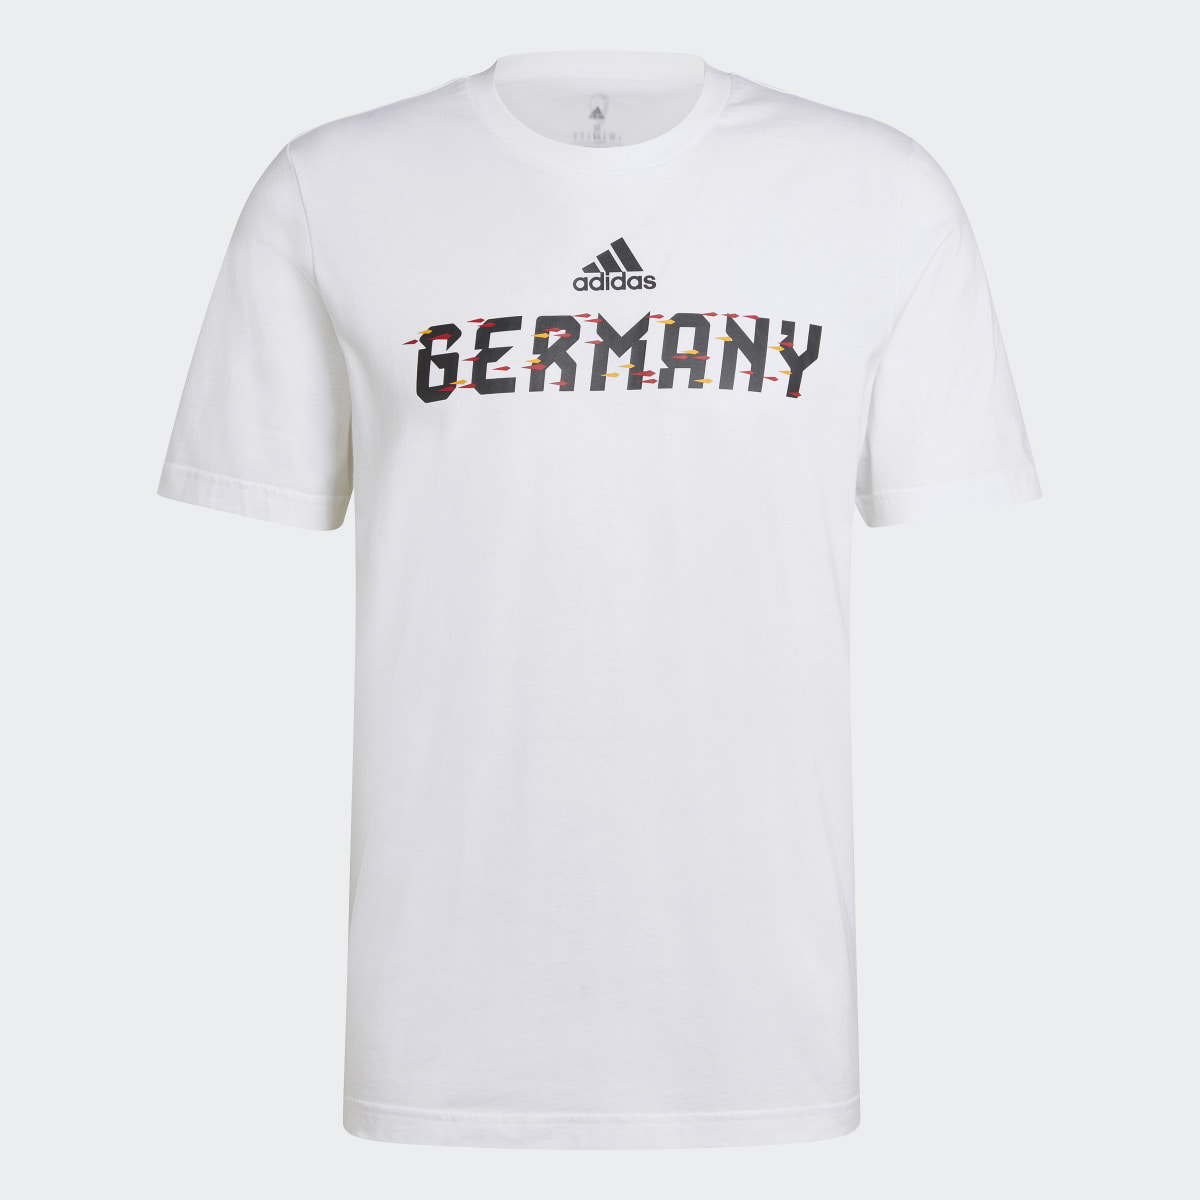 Adidas FIFA World Cup 2022™ Germany T-Shirt. 5